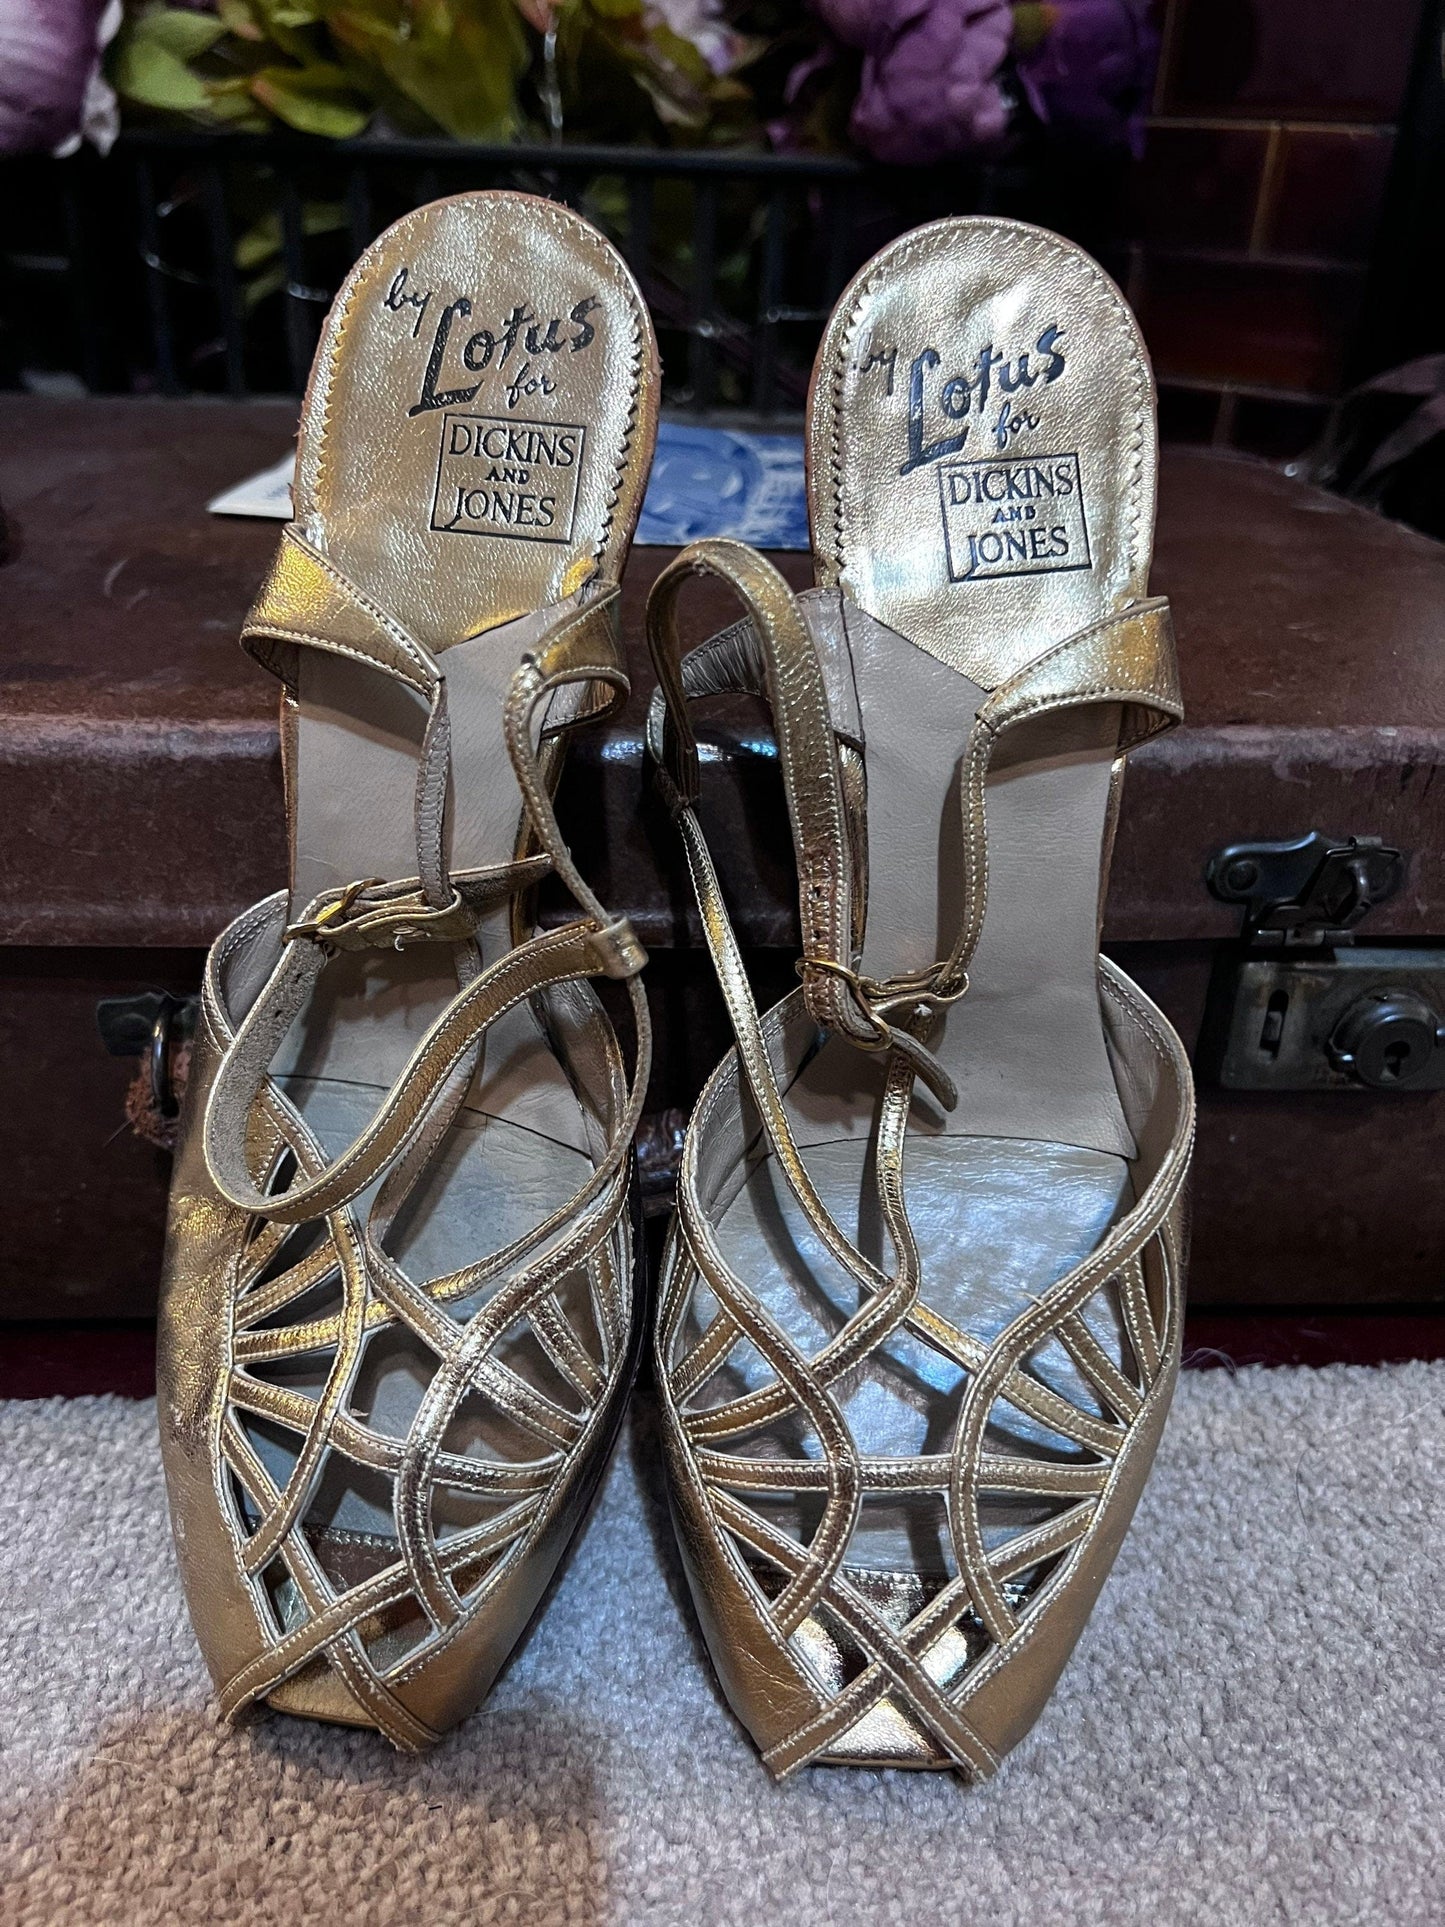 1940s Vintage Shoes Gold Evening Sandals Dance Shoes UK 5/5.5 - Vintage Sandals - Vintage Shoes by Lotus is for Dickins and Jones